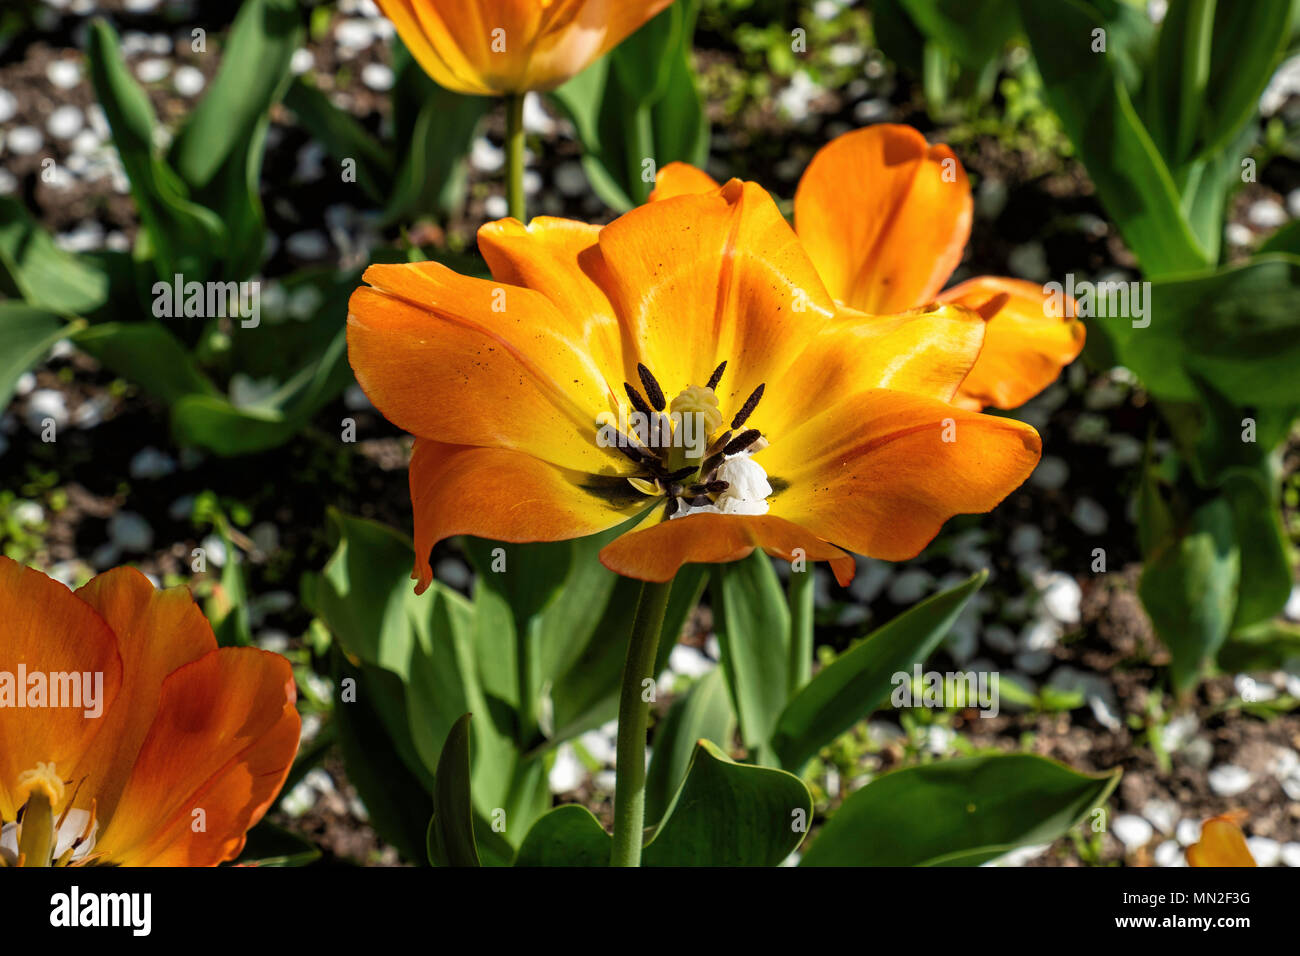 Britzer Garten, Neukölln, Berlin, Germany. 2018. Garden with spring flowering bulbs, yellow and orange tulip flowers                                   Stock Photo